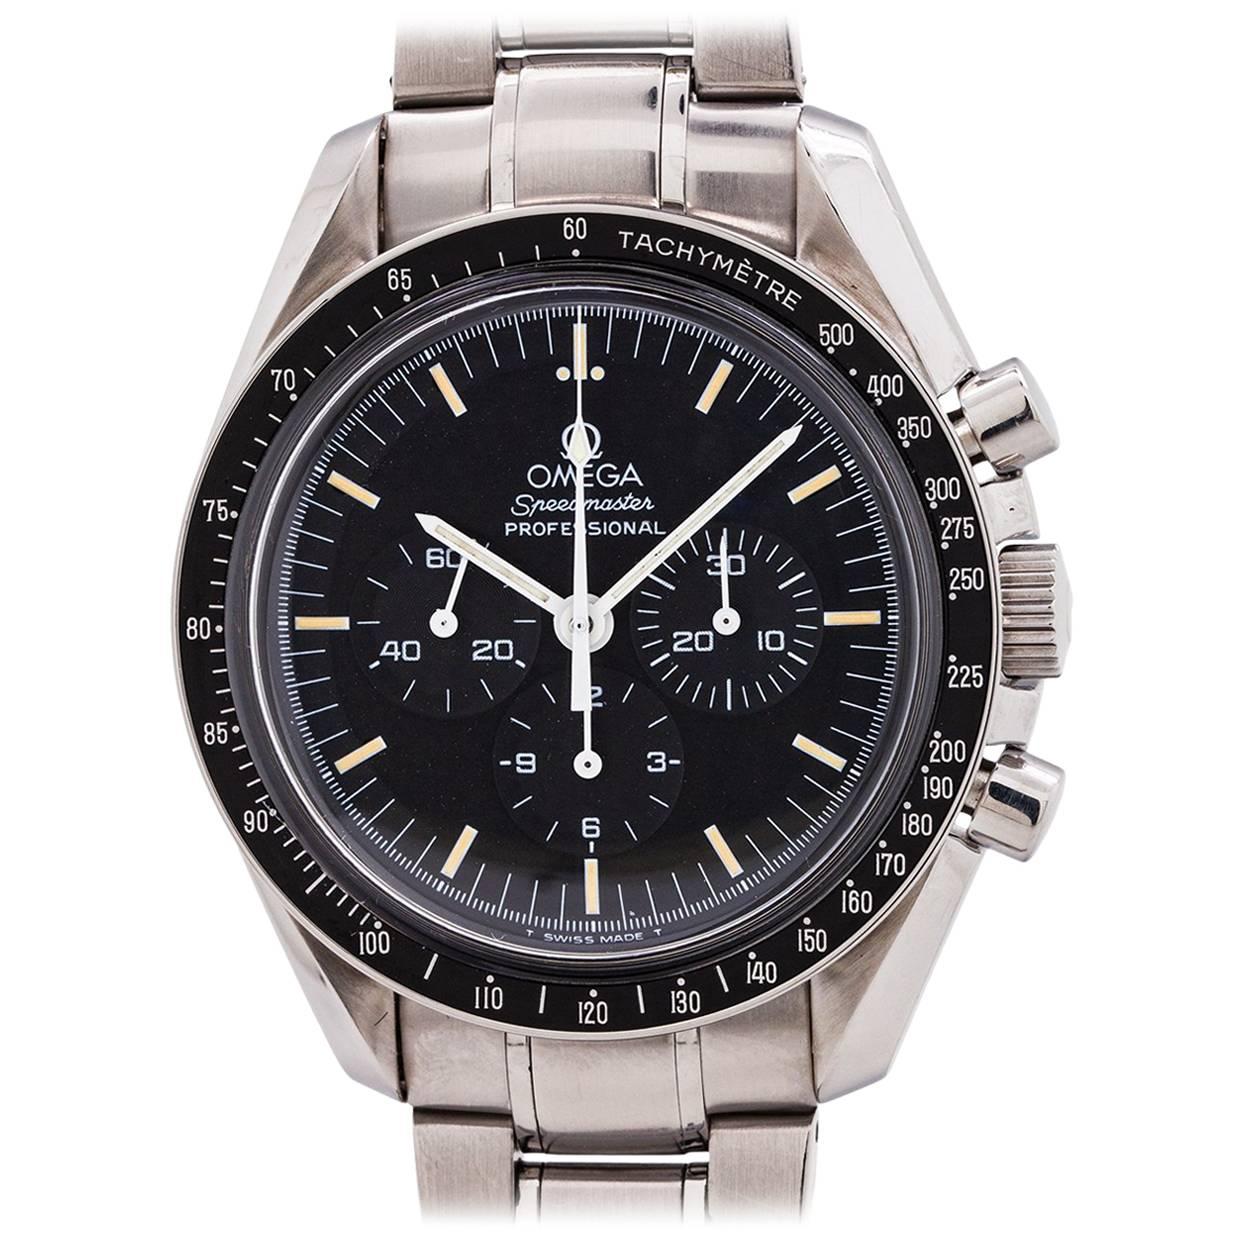 Omega stainless steel Speedmaster Professional manual wristwatch, c 1997